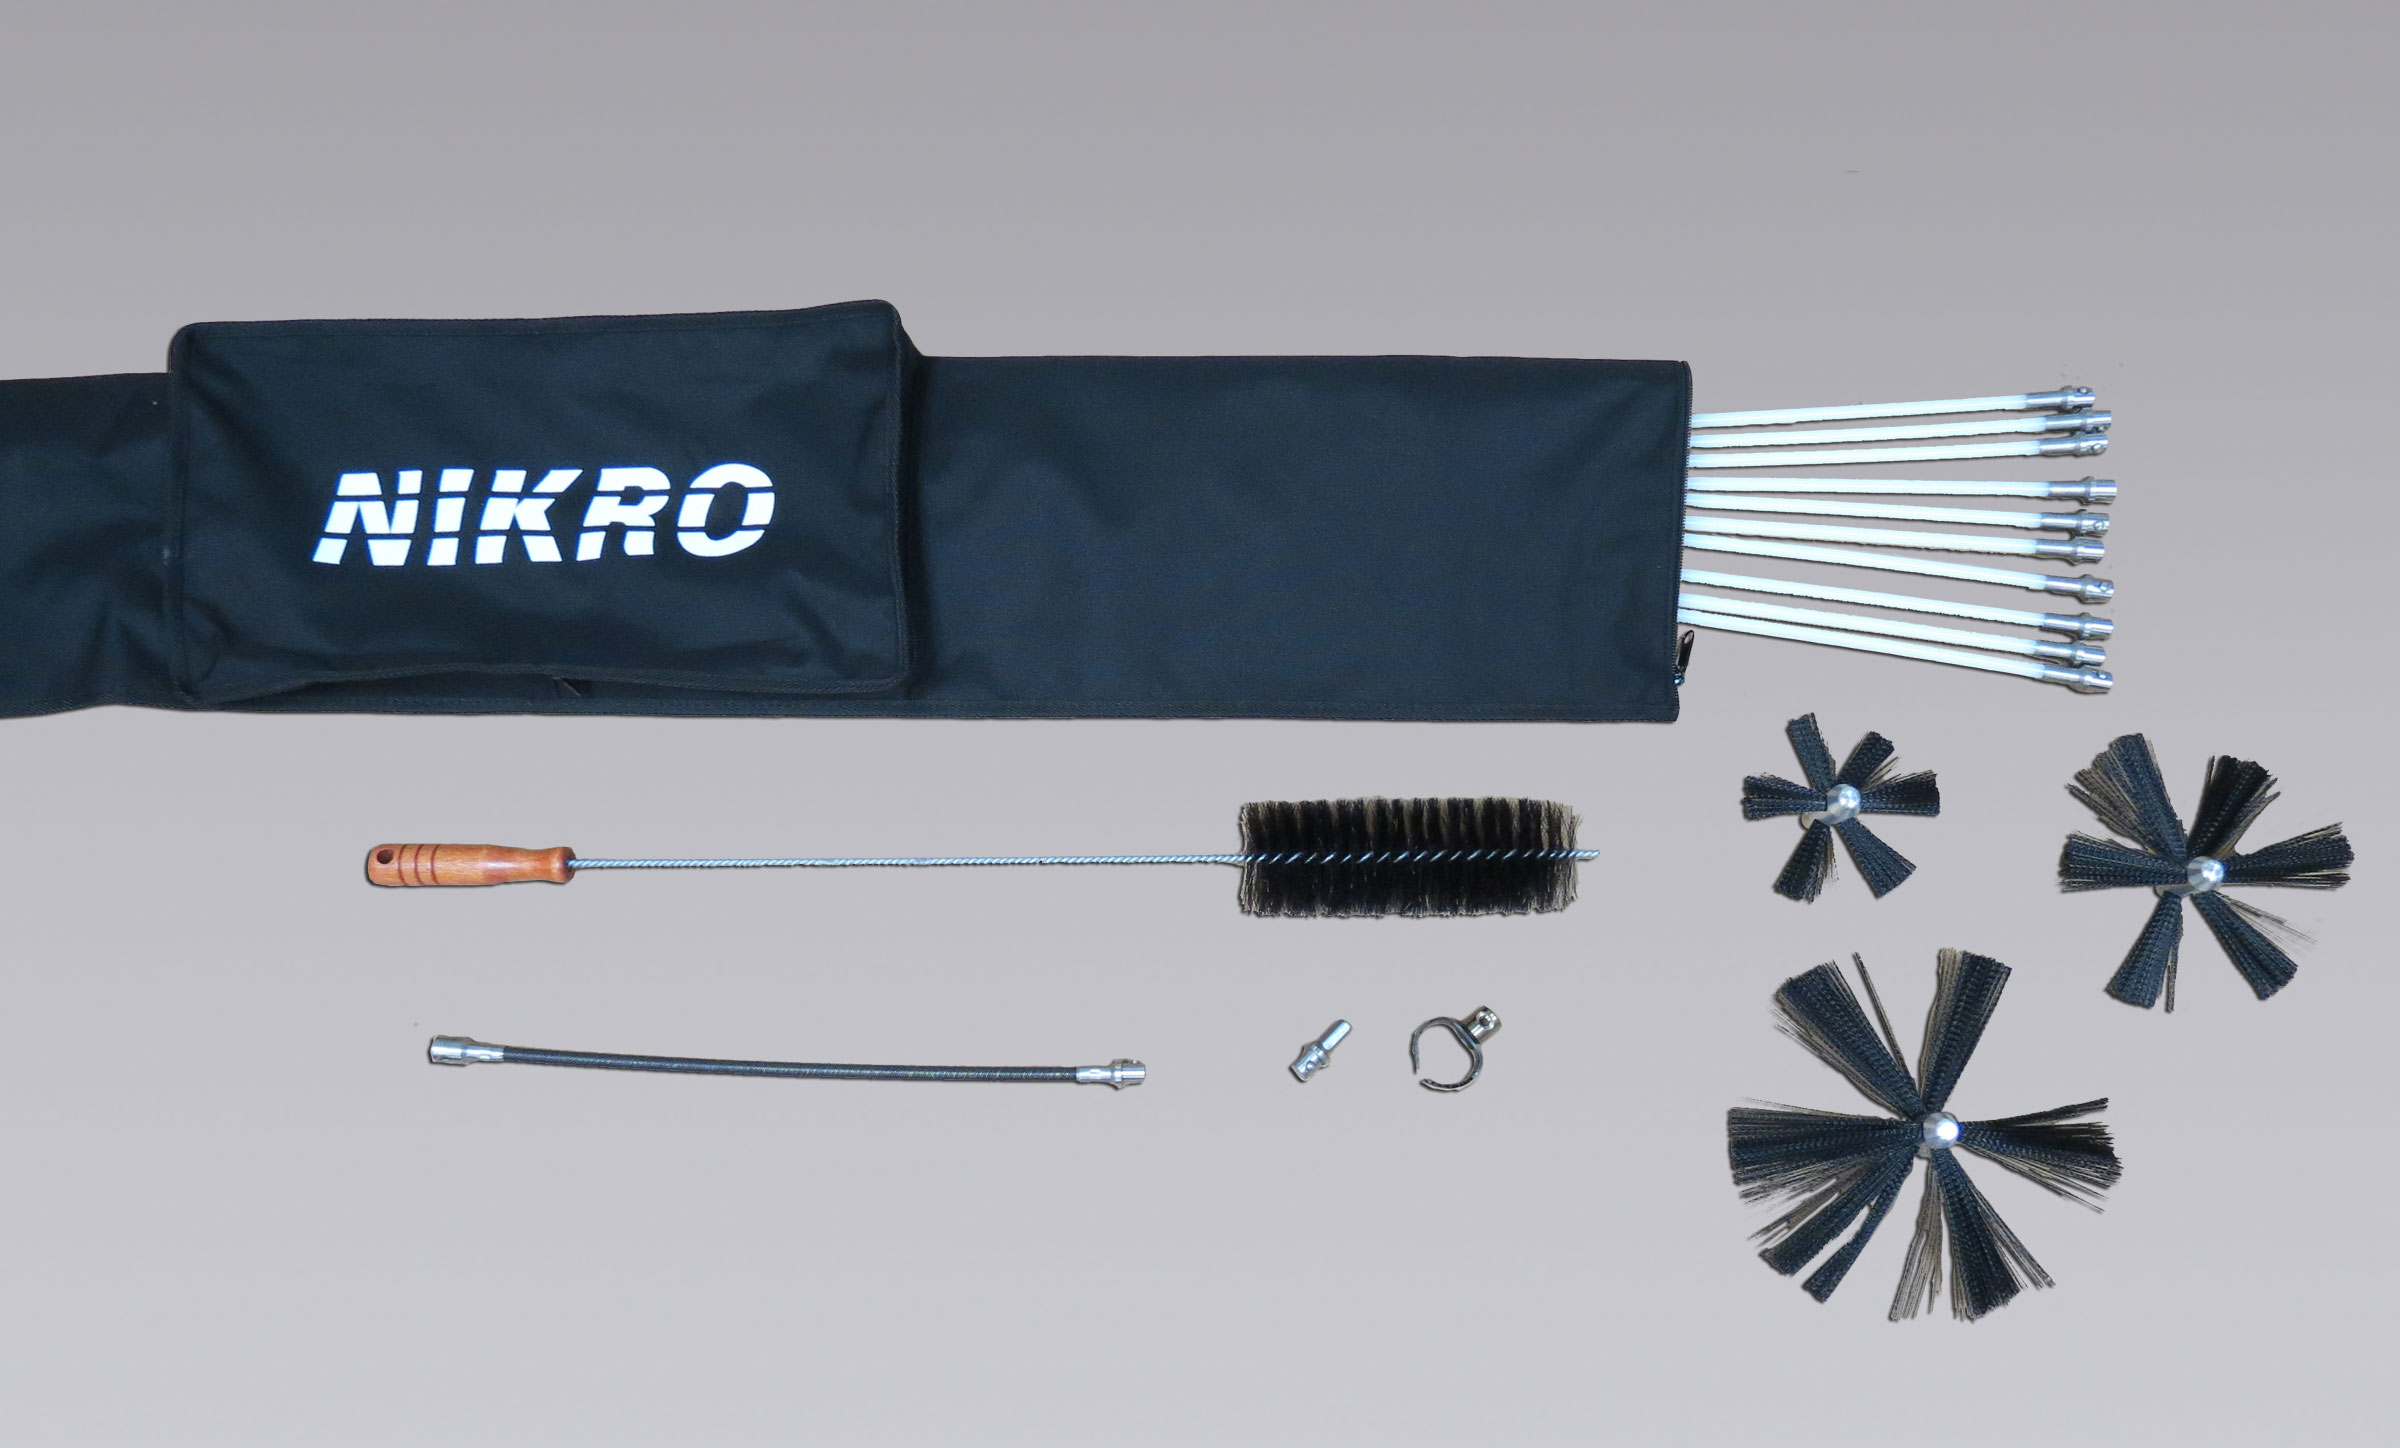 861710 - Deluxe Dryer Vent Rotary Brush Kit - NIKRO Industries, Inc.